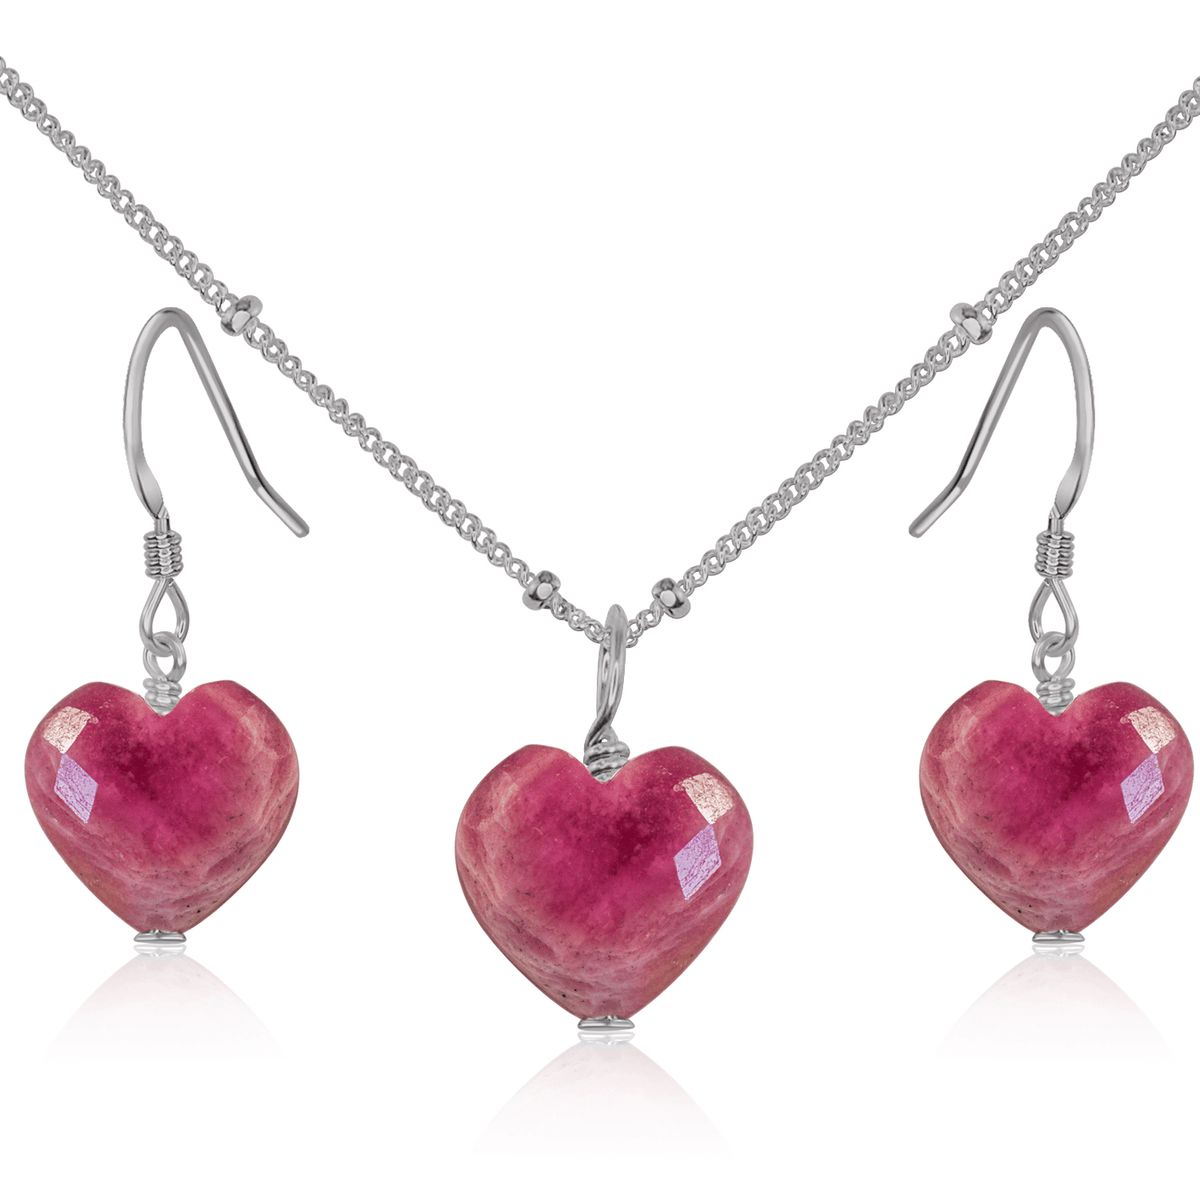 Ruby Crystal Heart Jewellery Set - Ruby Crystal Heart Jewellery Set - Stainless Steel / Satellite / Necklace & Earrings - Luna Tide Handmade Crystal Jewellery